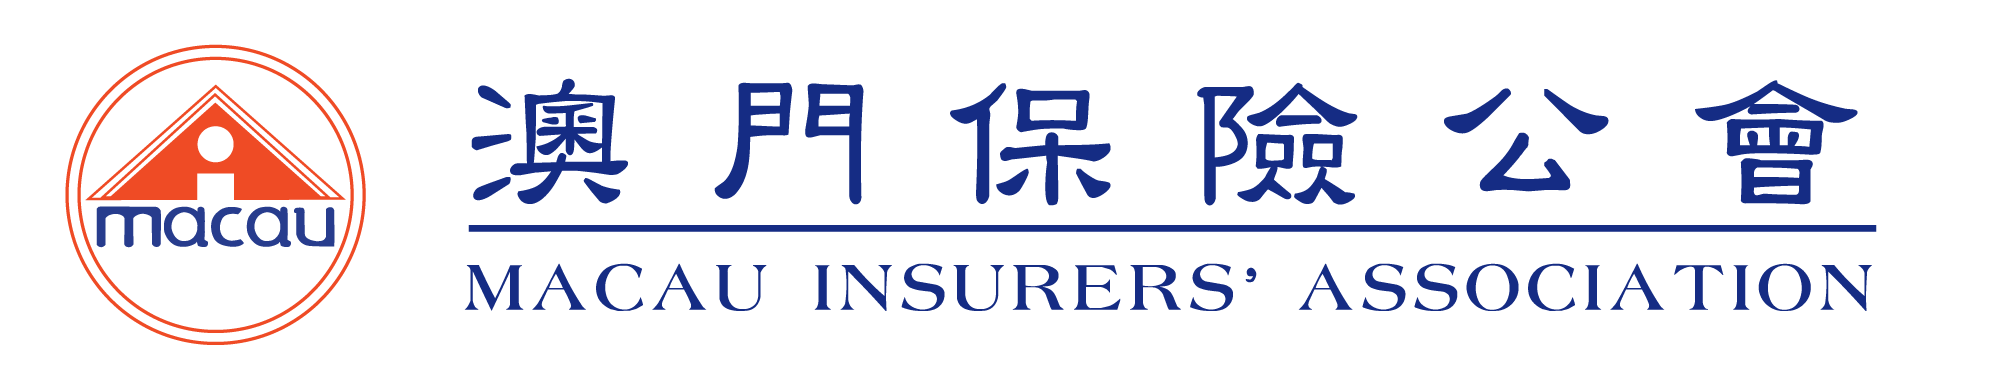 Macau Insurers' Association